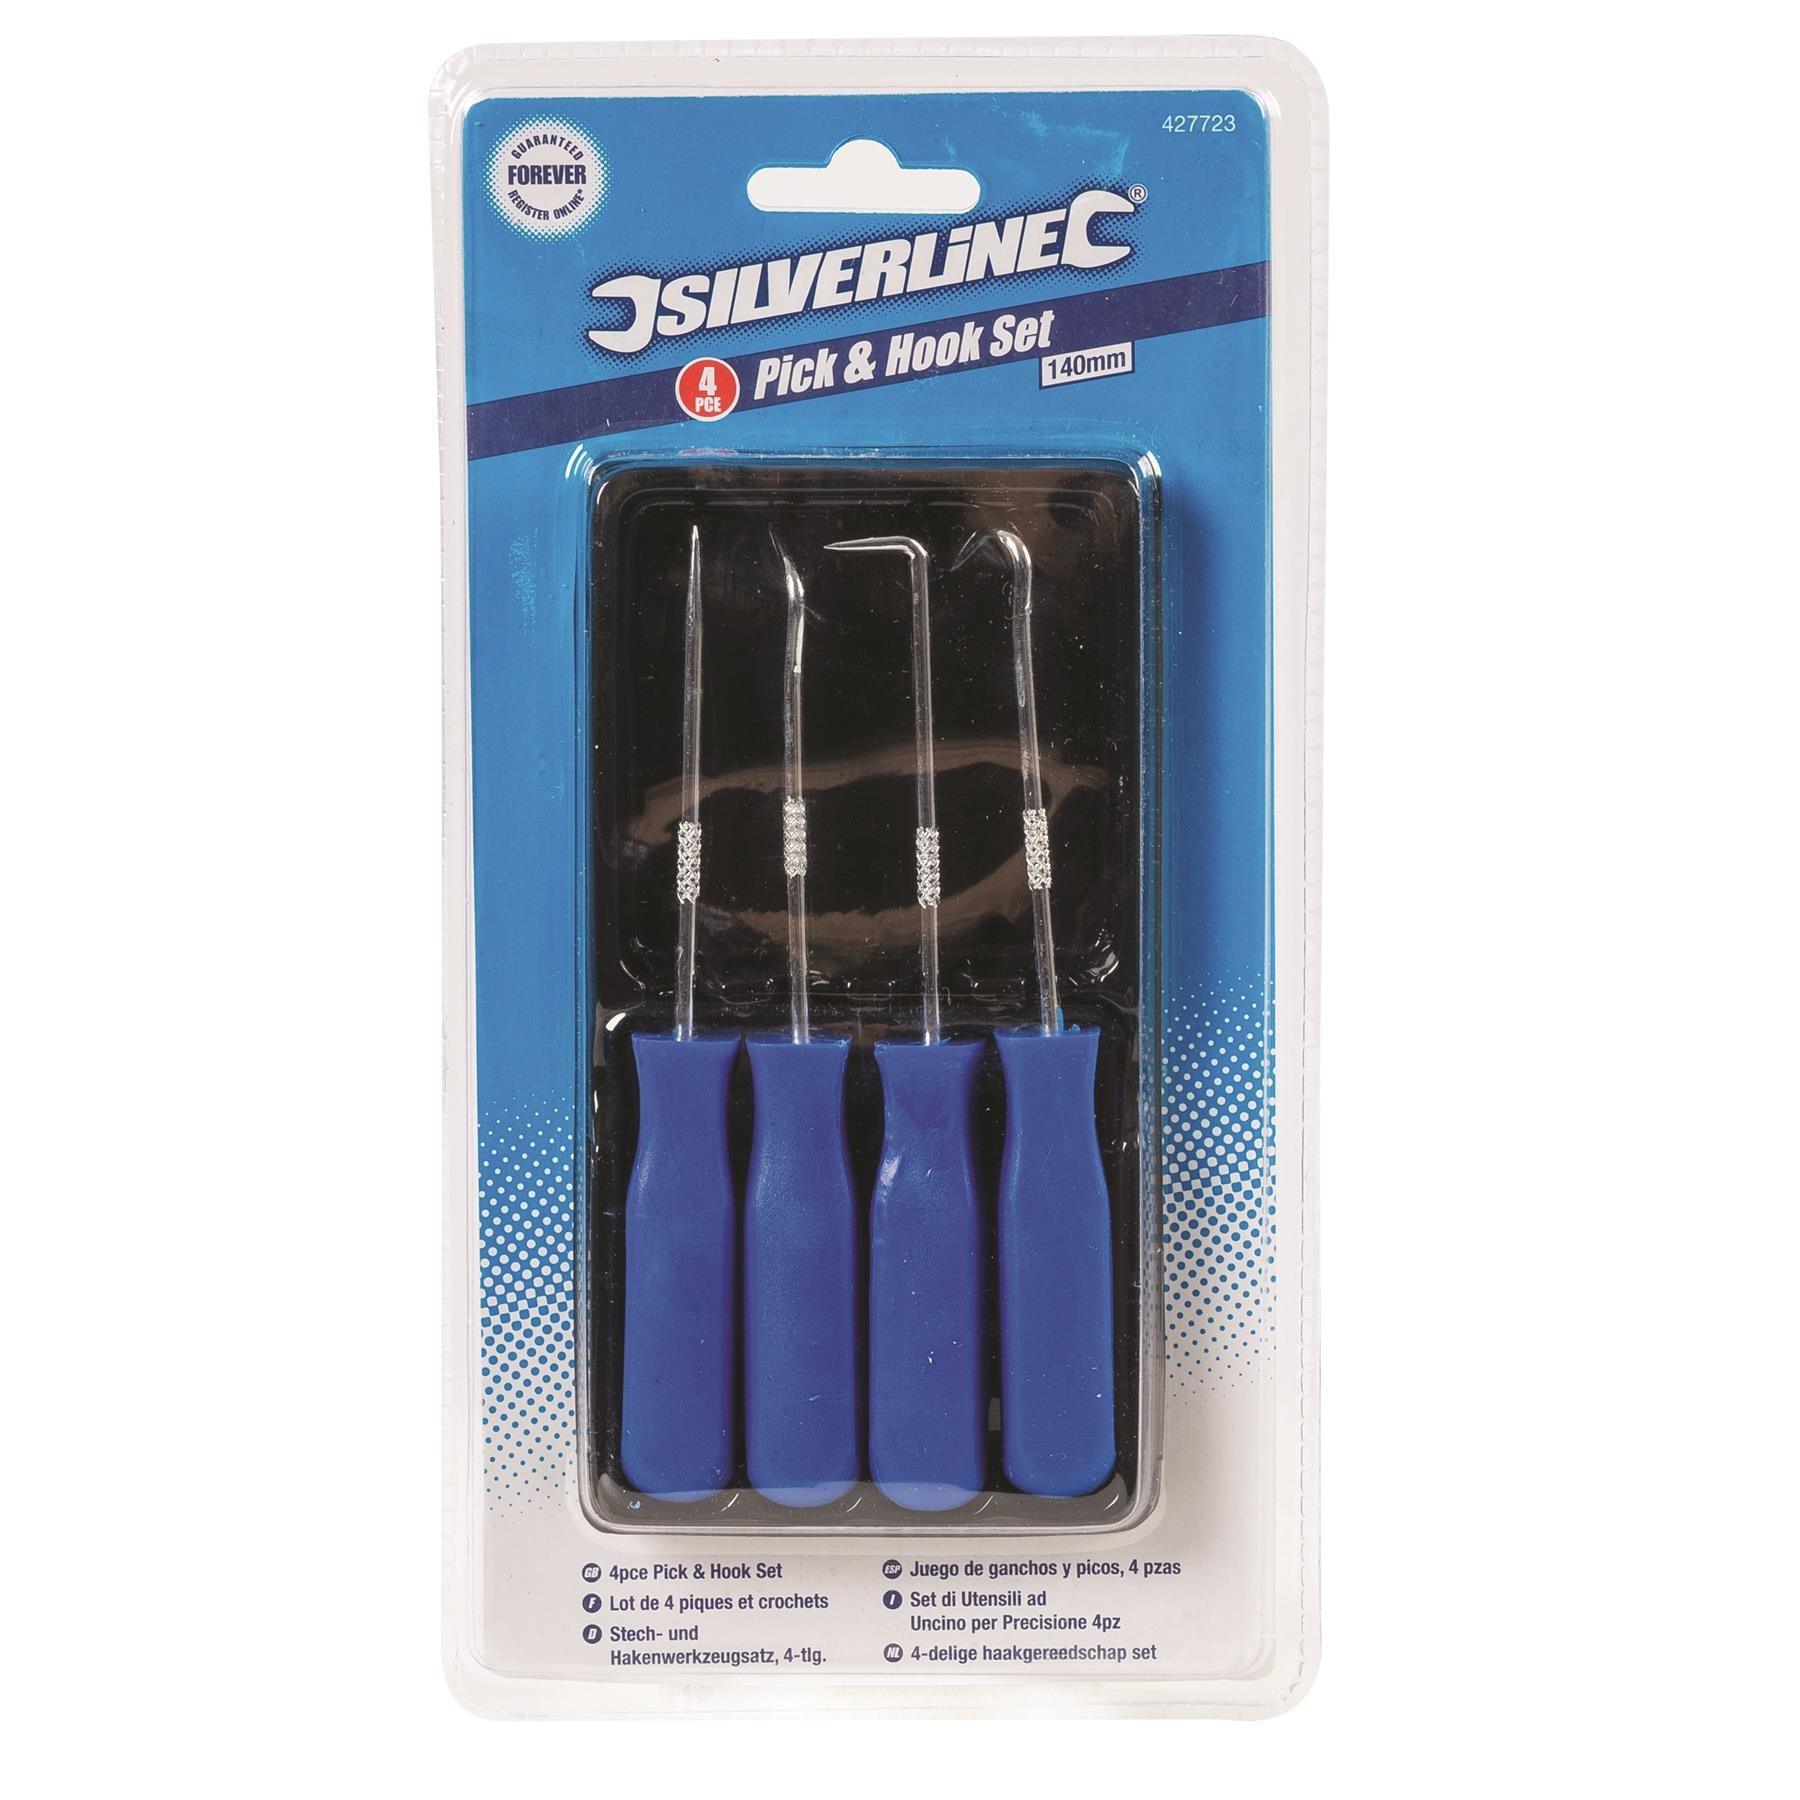 Silverline 4pc Short Mini Pick & Hook Set 427723 - Tools 2U Direct SW